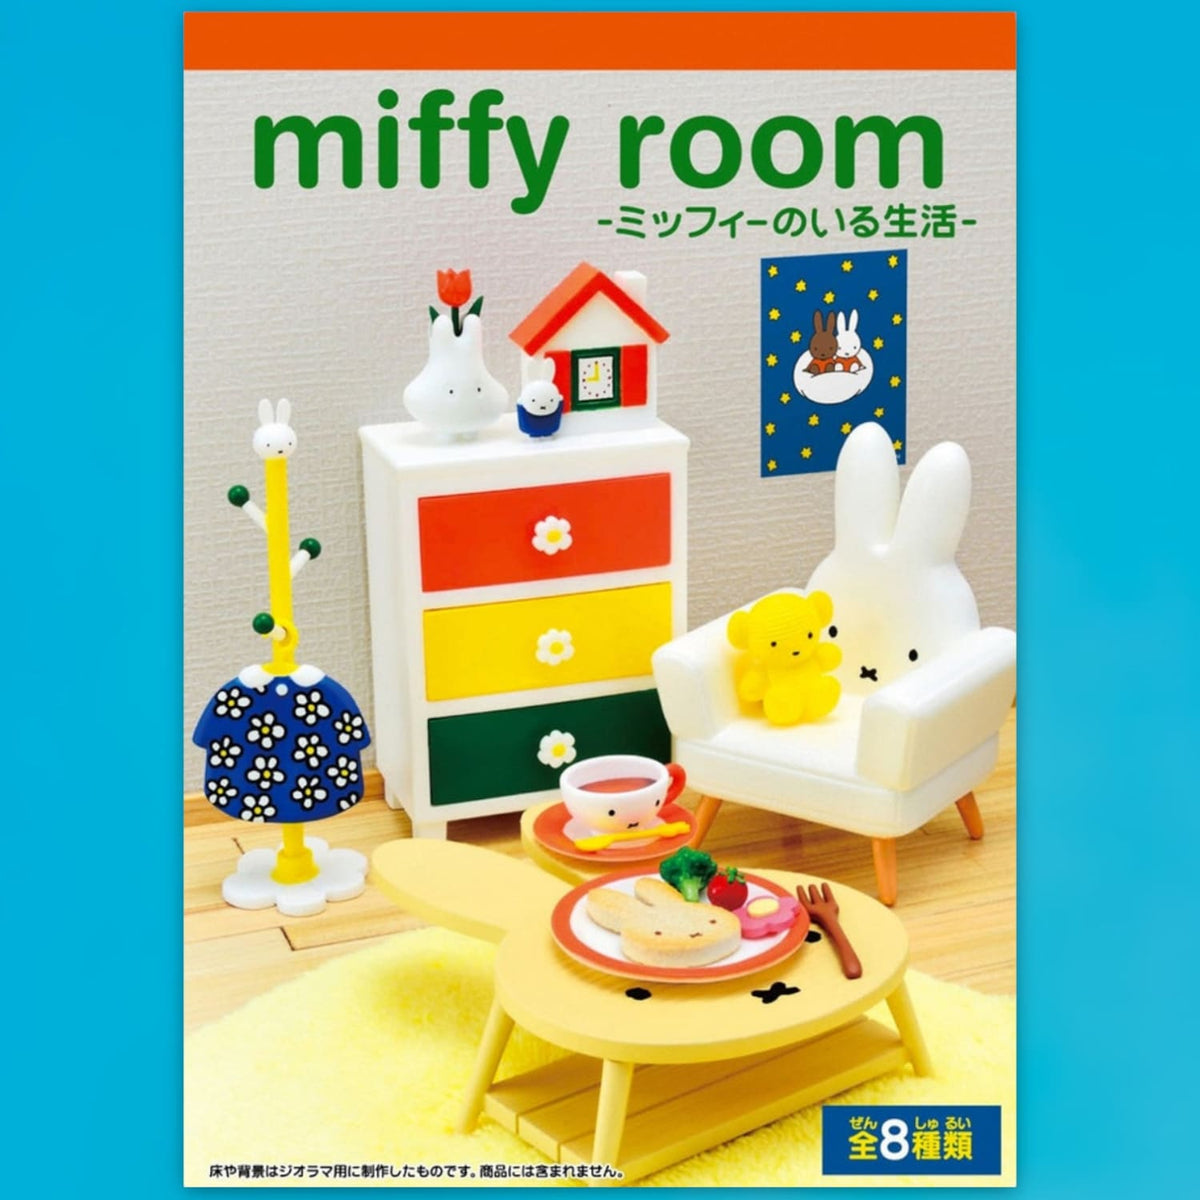 Miffy Miniature Room Blind Box - Sneak Peek Toy